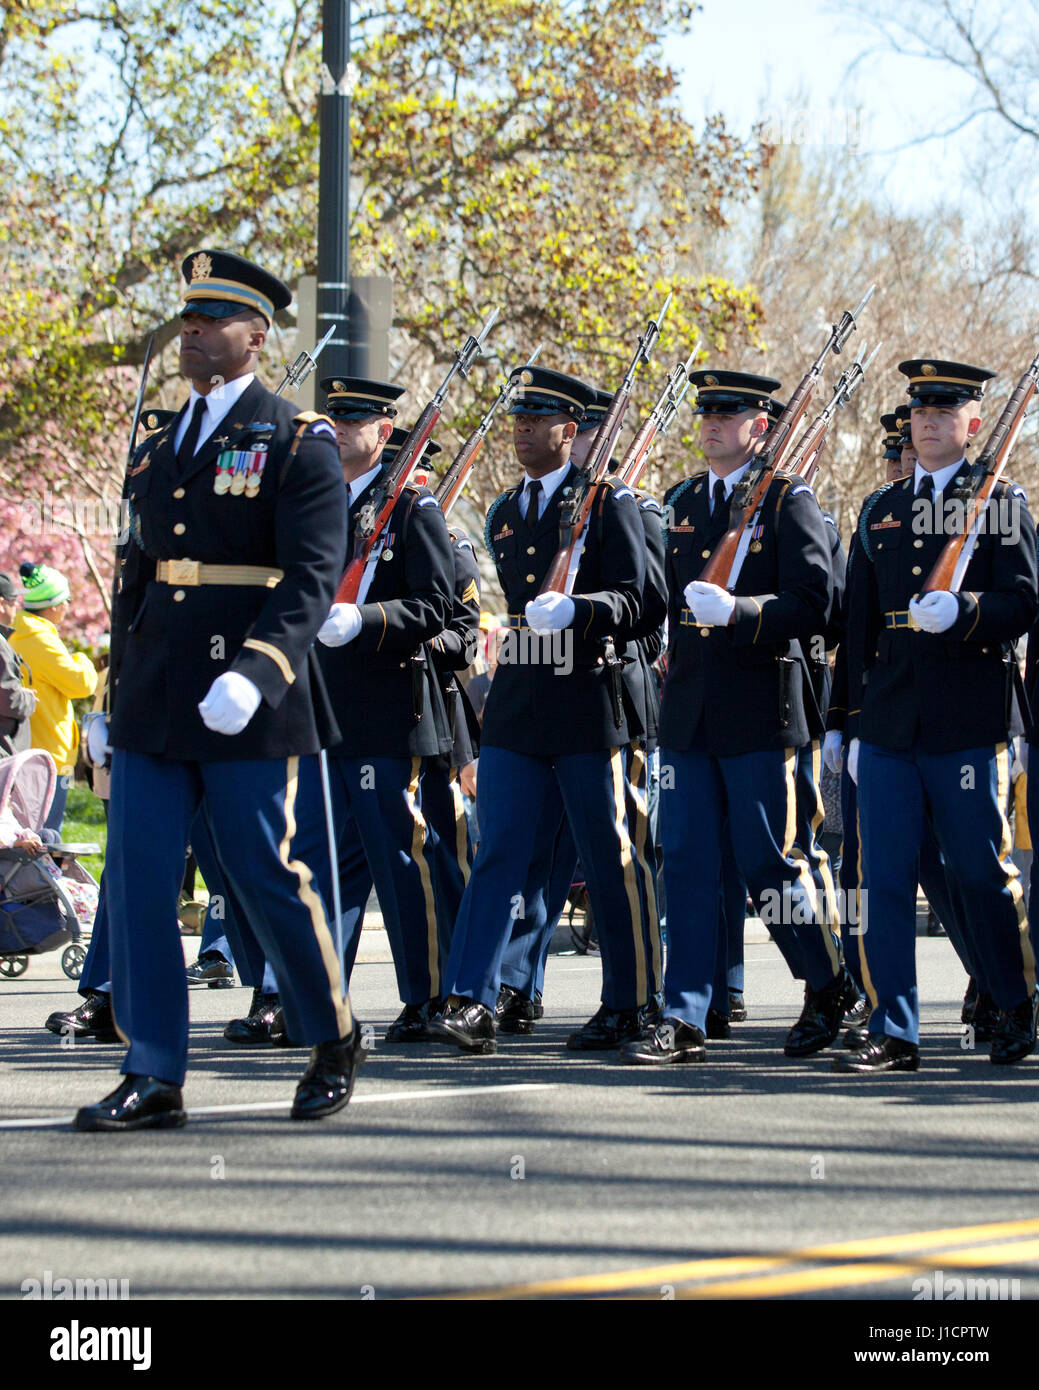 US Army Honor Guard marching during parade - Washington, DC USA Stock Photo